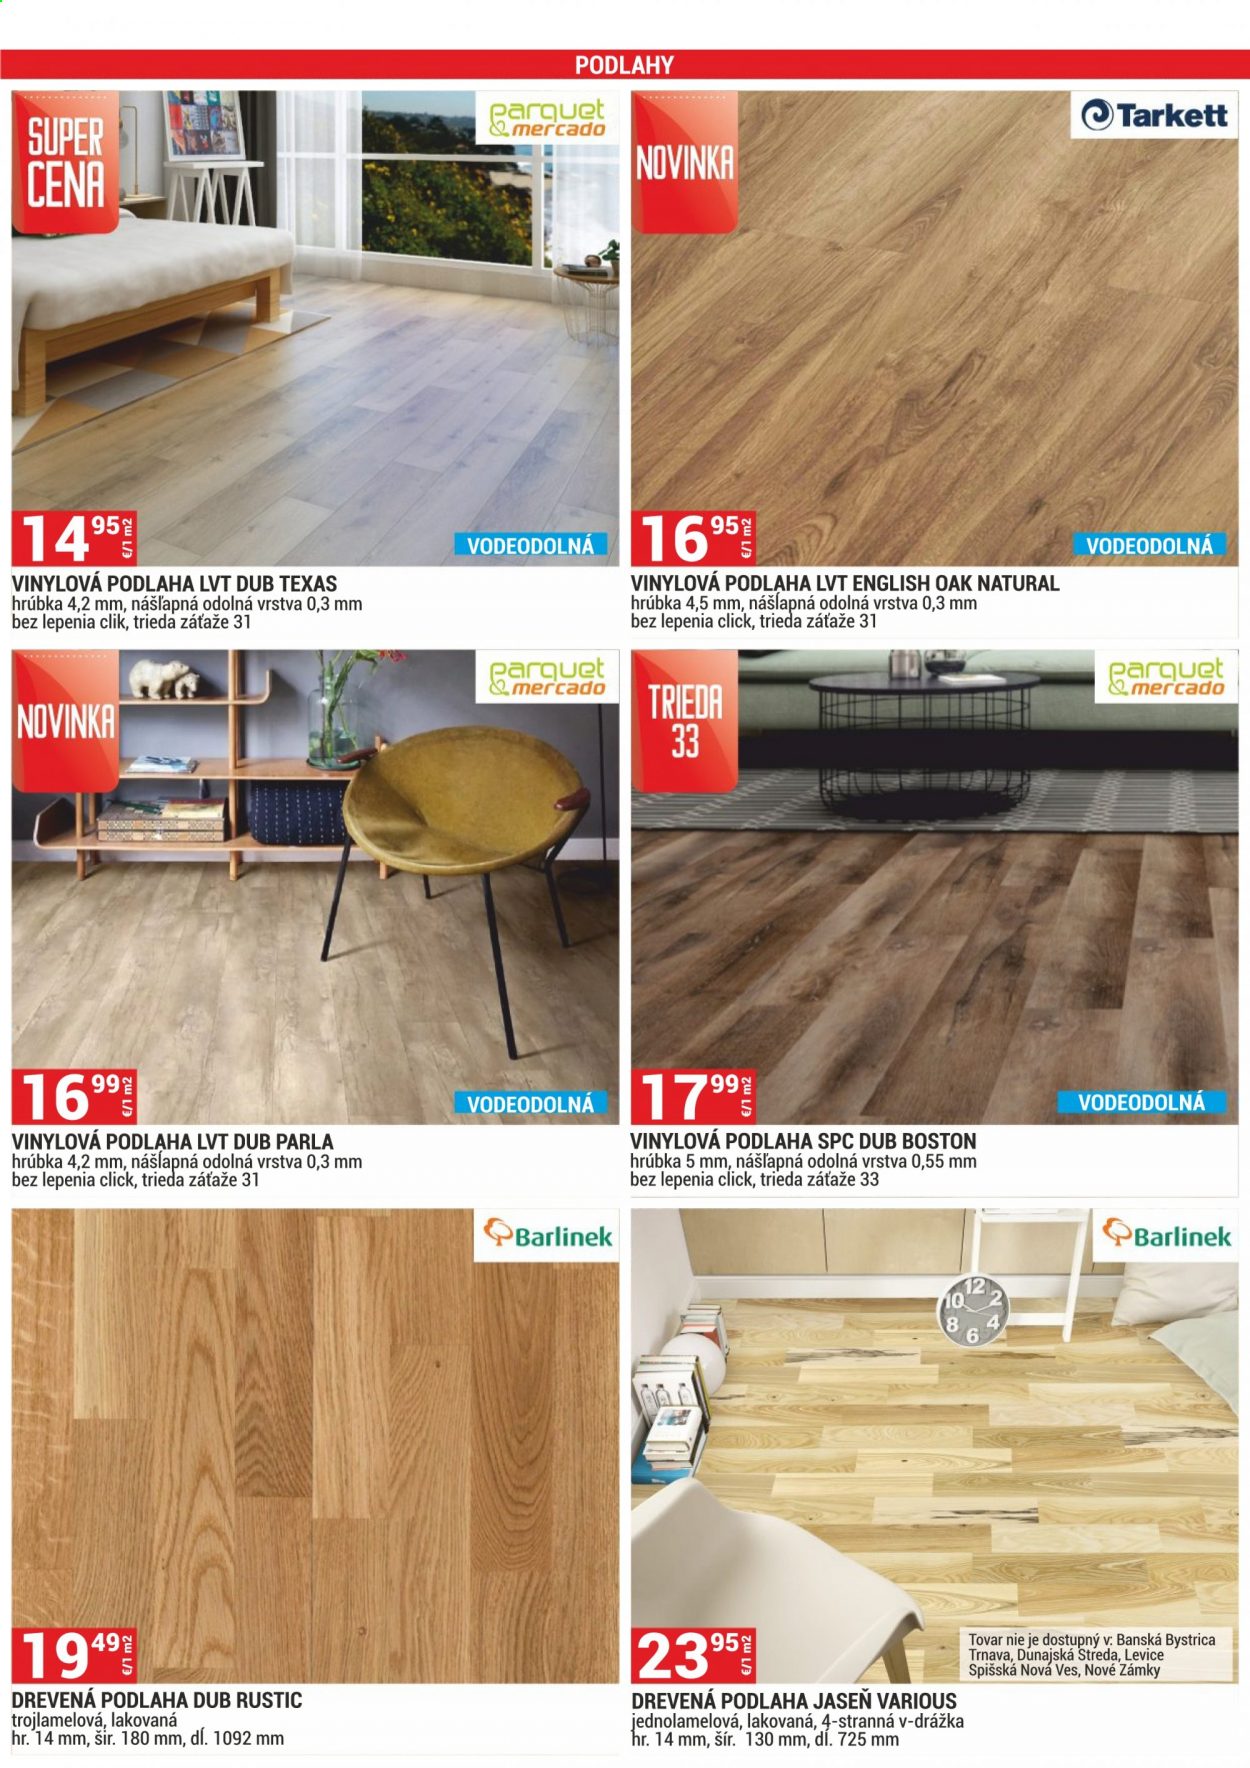 thumbnail - Leták Merkury Market - 2.9.2021 - 30.9.2021 - Produkty v akcii - drevená podlaha, podlaha, vinylová podlaha. Strana 42.